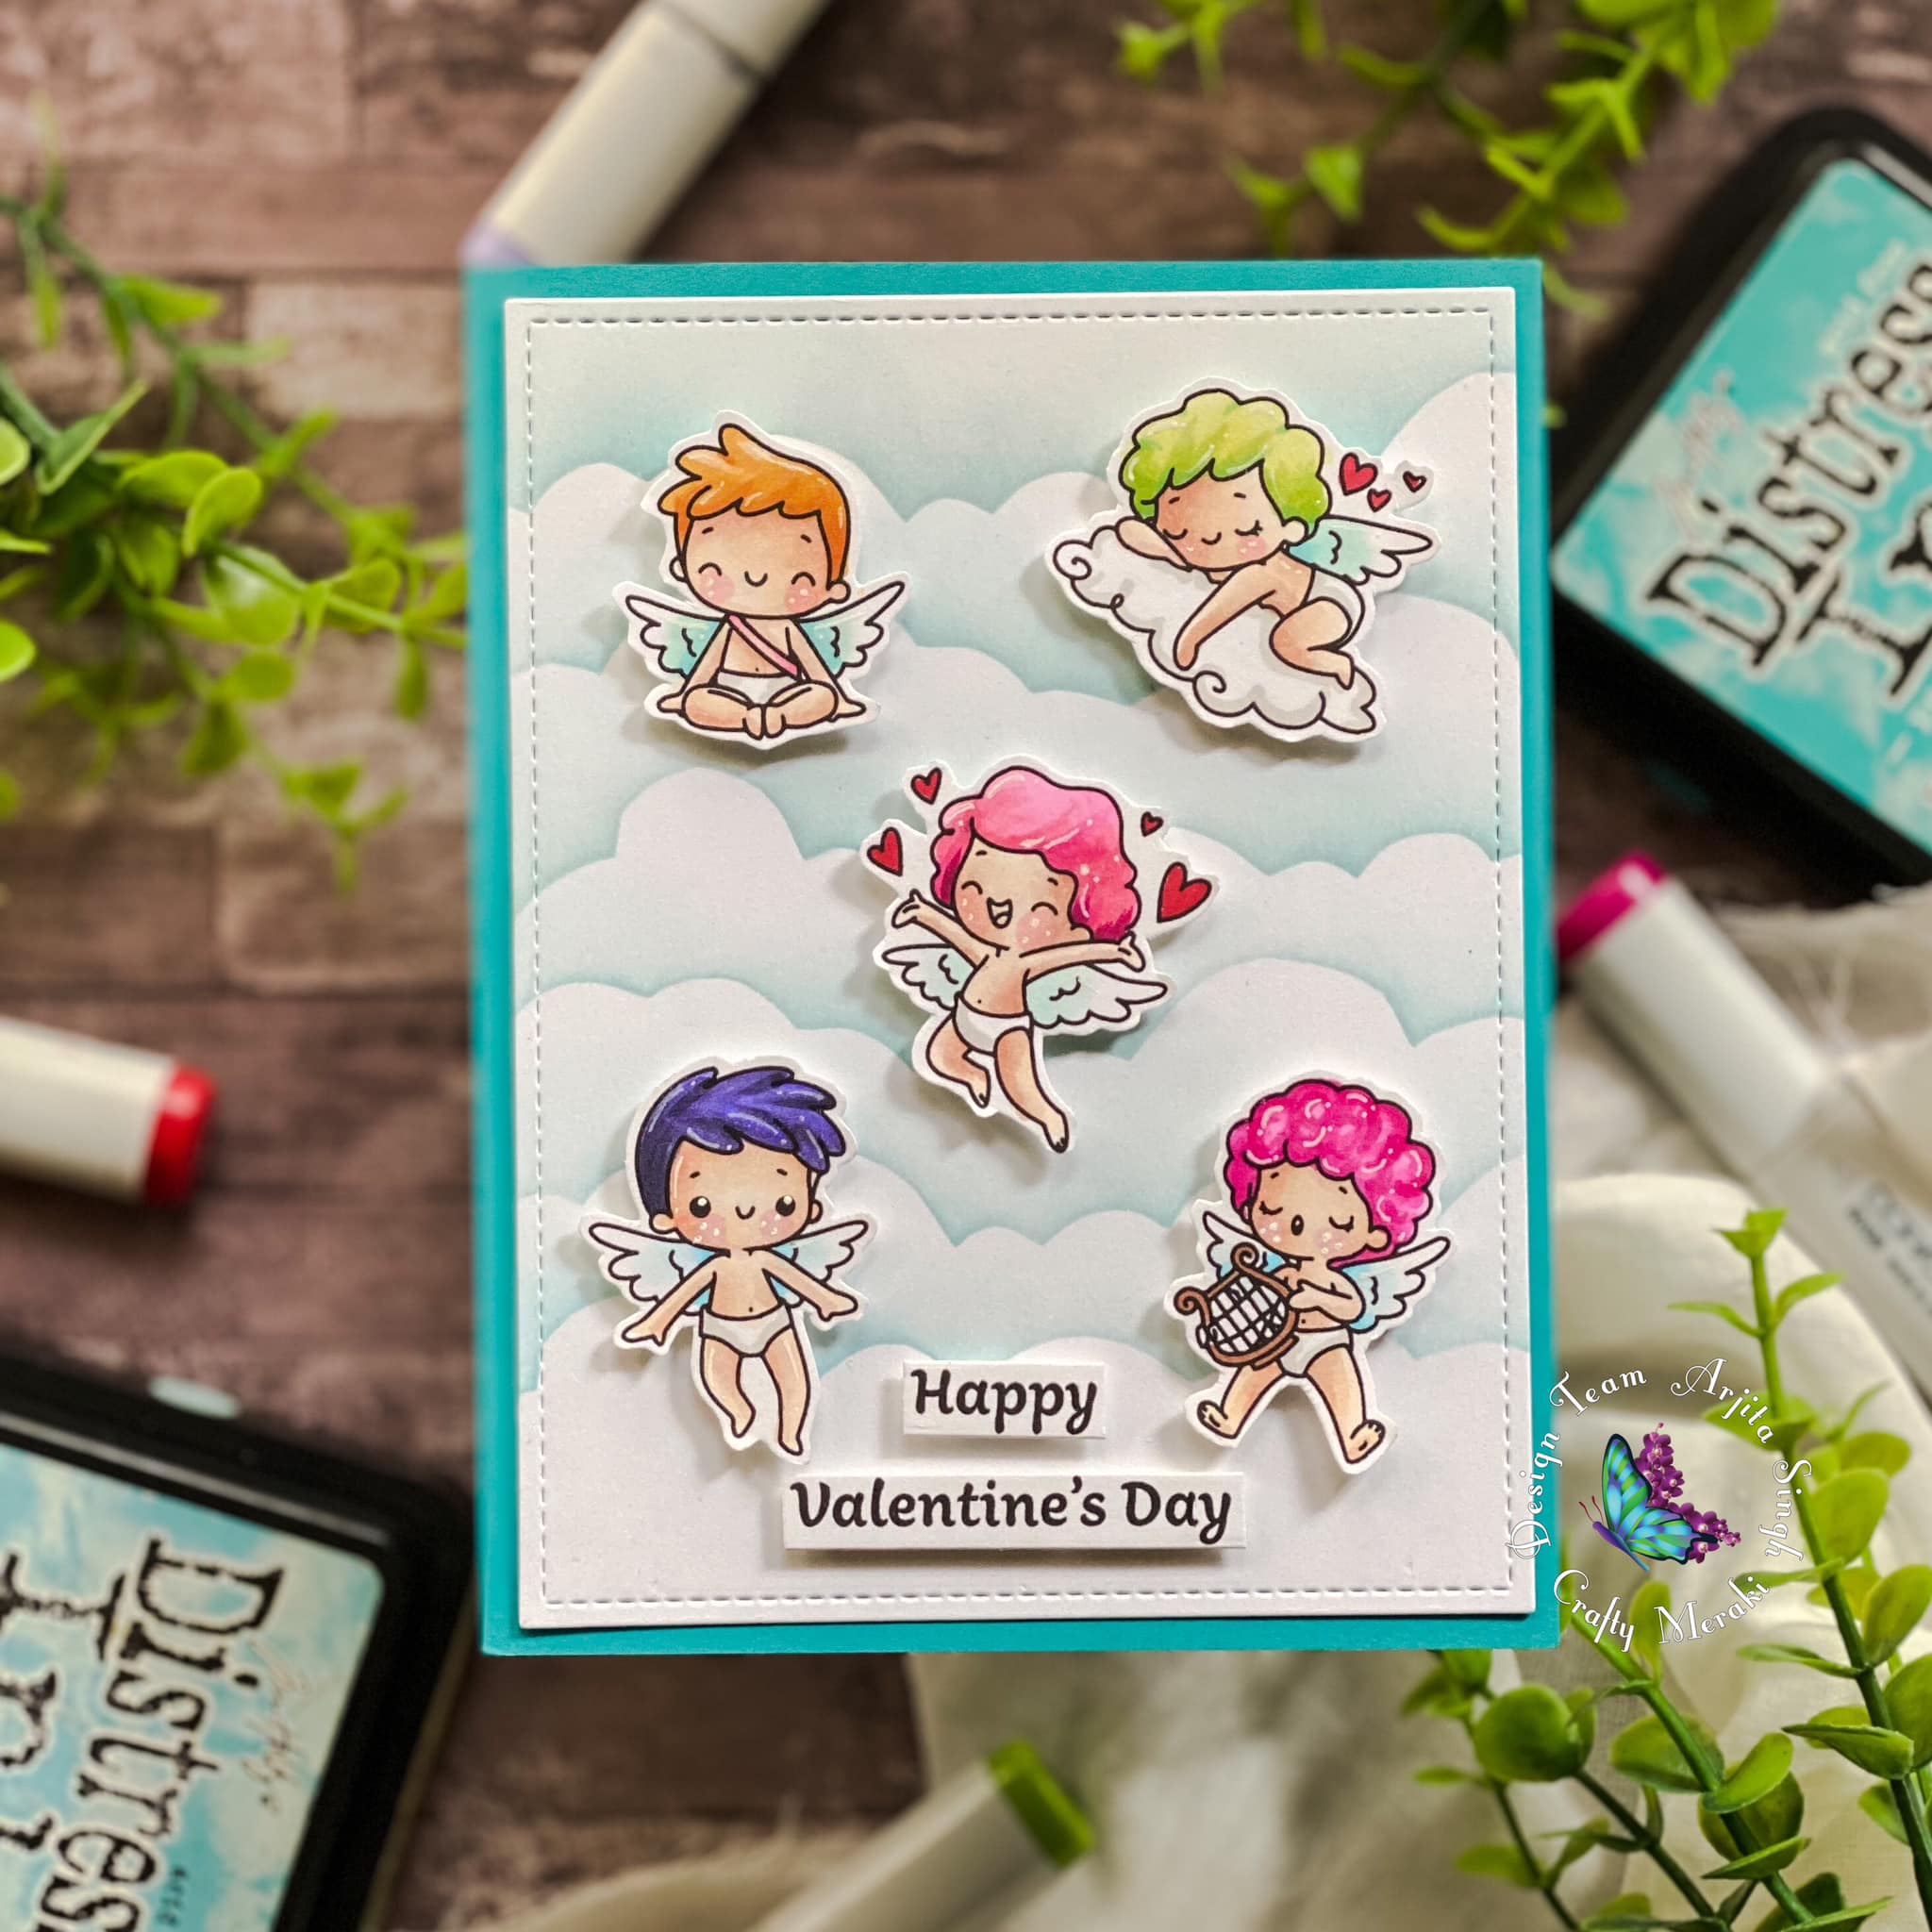 Crafty Meraki Crazy Cupid Love Stamp set - Crafty Meraki